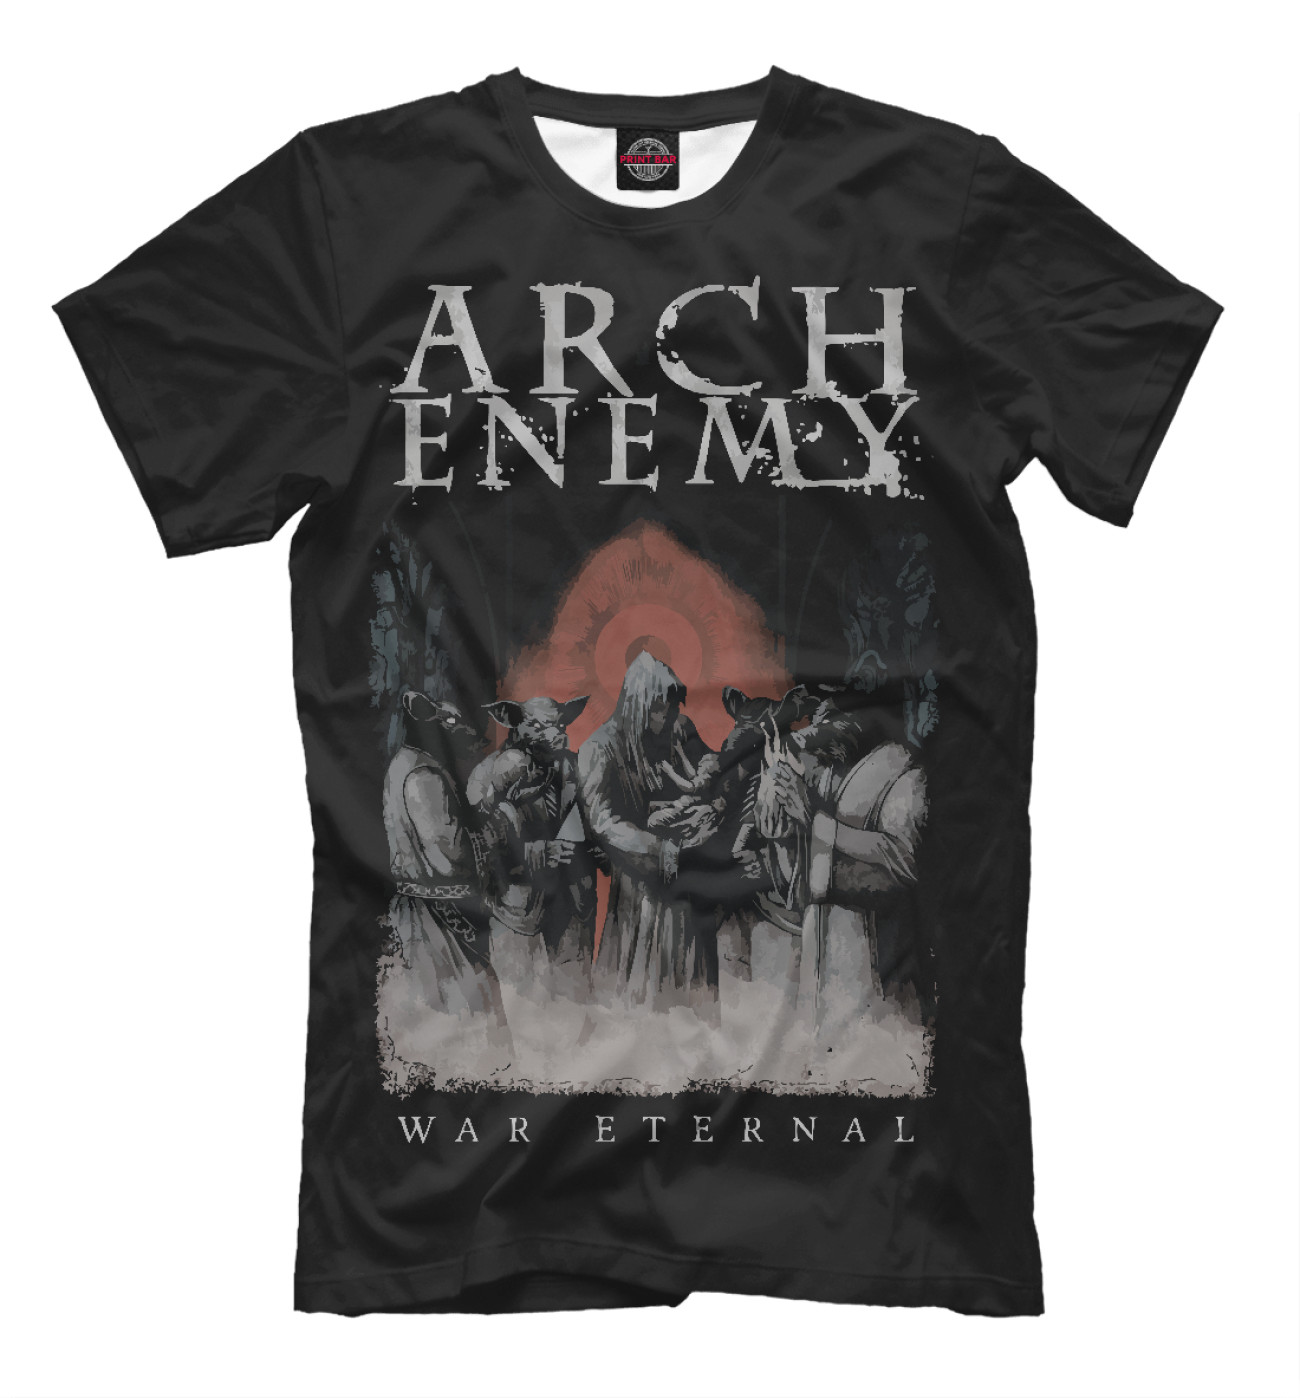 Мужская Футболка Arch Enemy, артикул: AEN-721464-fut-2